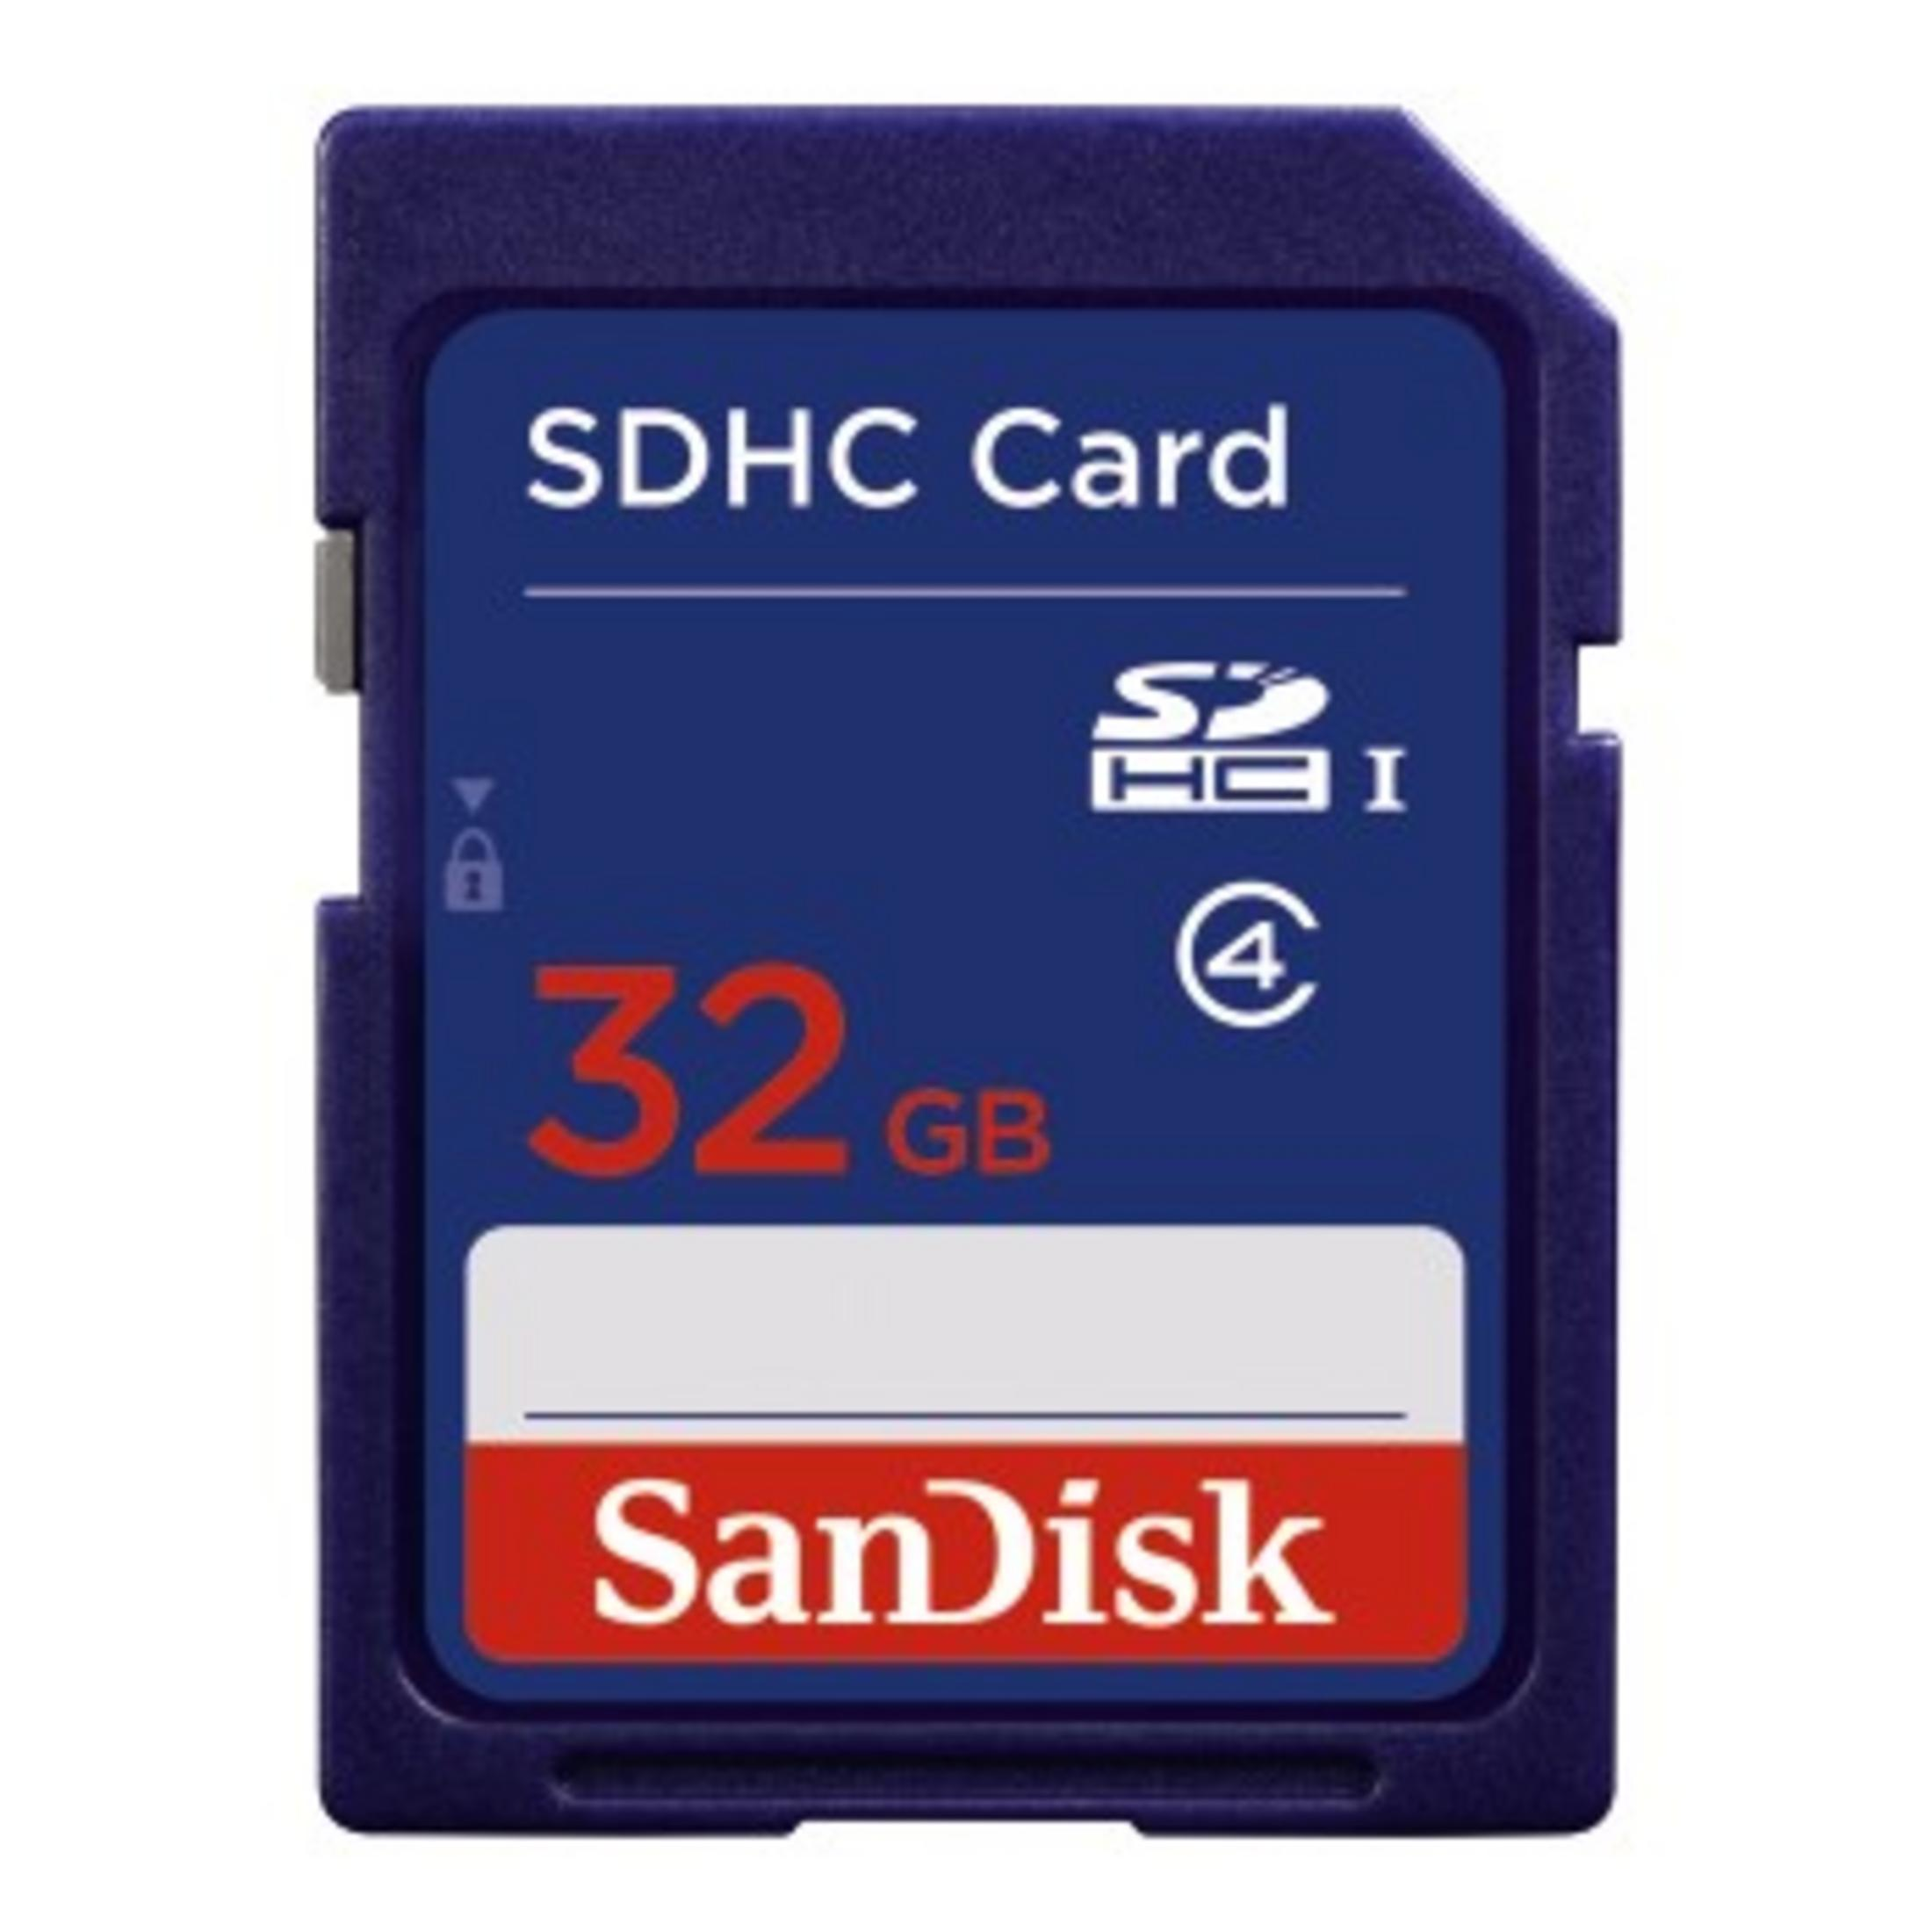 SDSDB-032G-B35 GB, MB/s CLASS 32GB 4, Speicherkarte, SDHC SDHC SANDISK 15 32